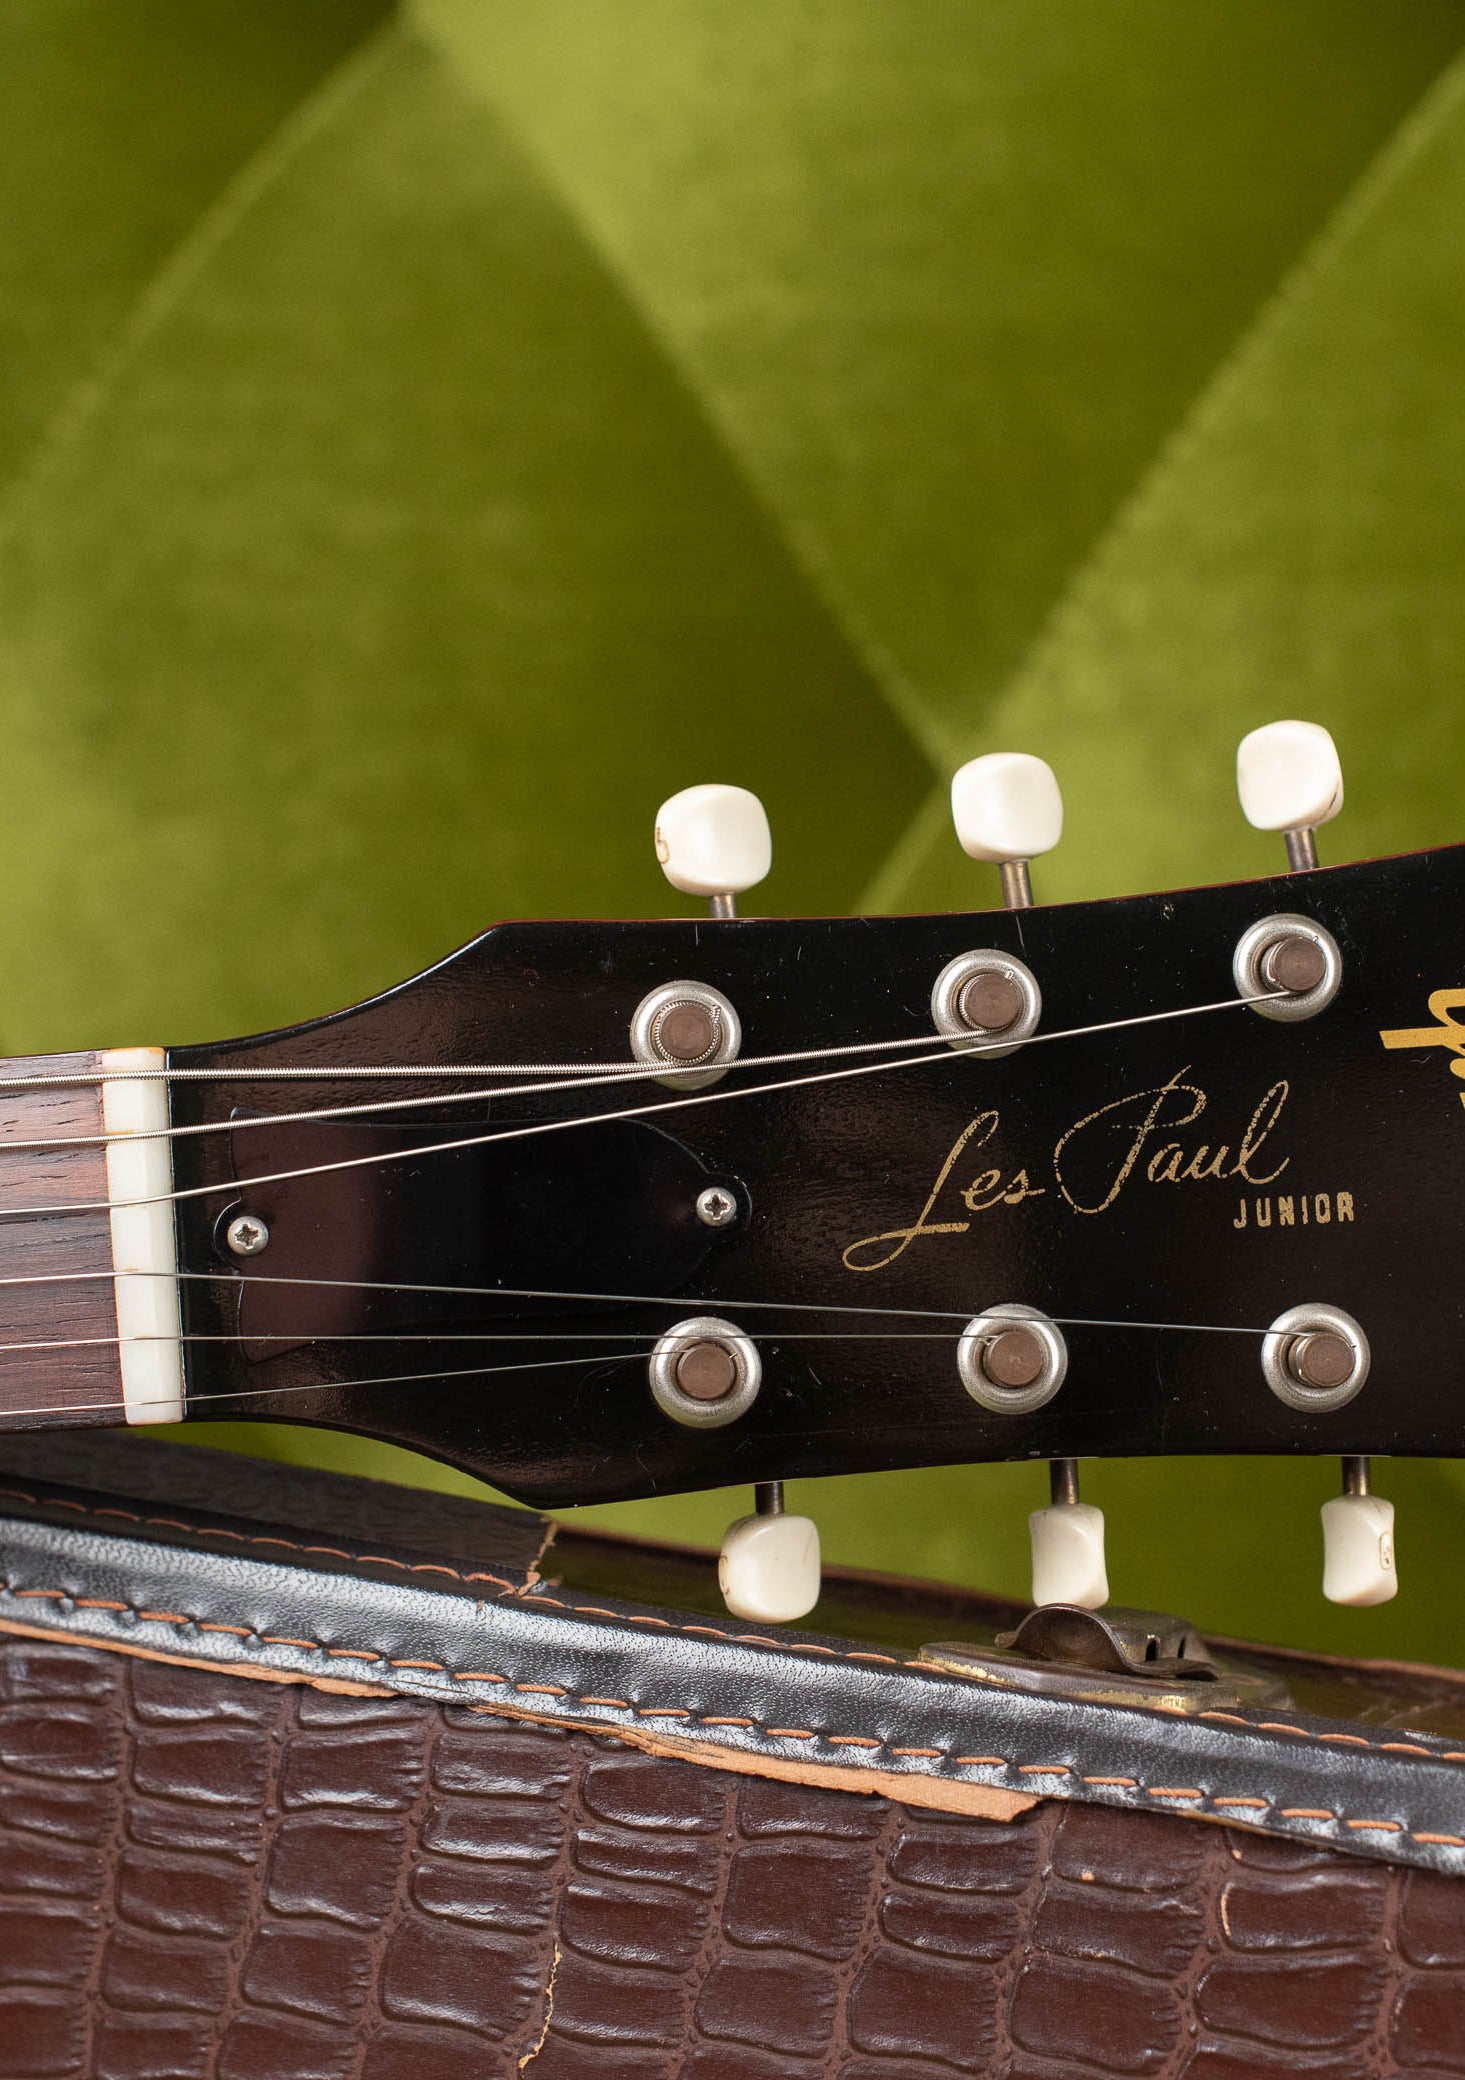 Les Paul Gibson guitar